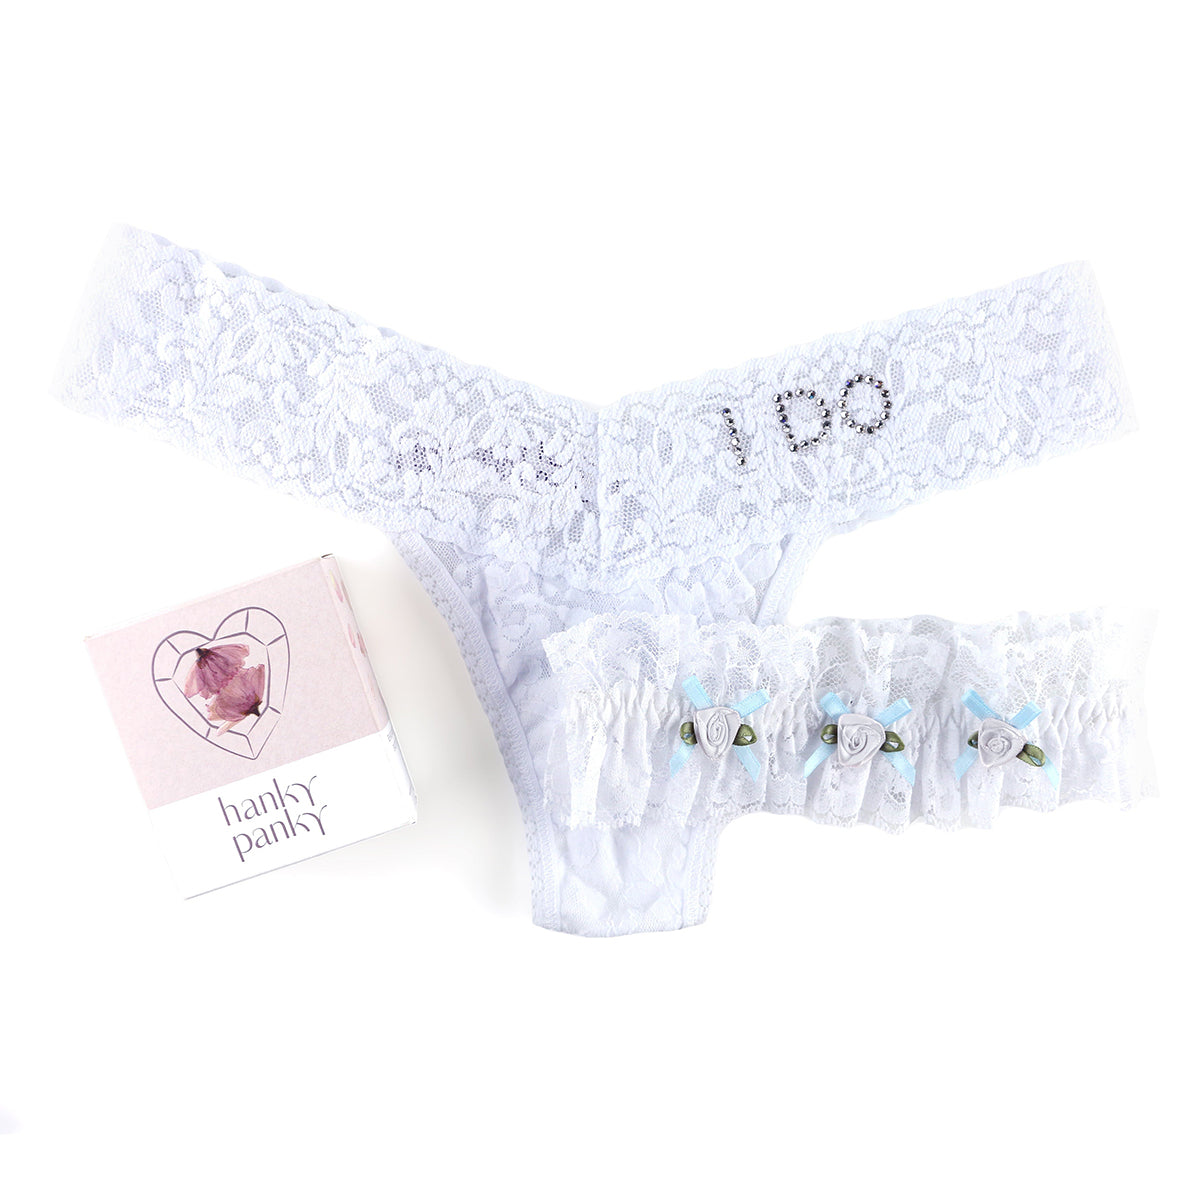 Peach pink sweet heart sexy lingerie set (bra+panties+garters）